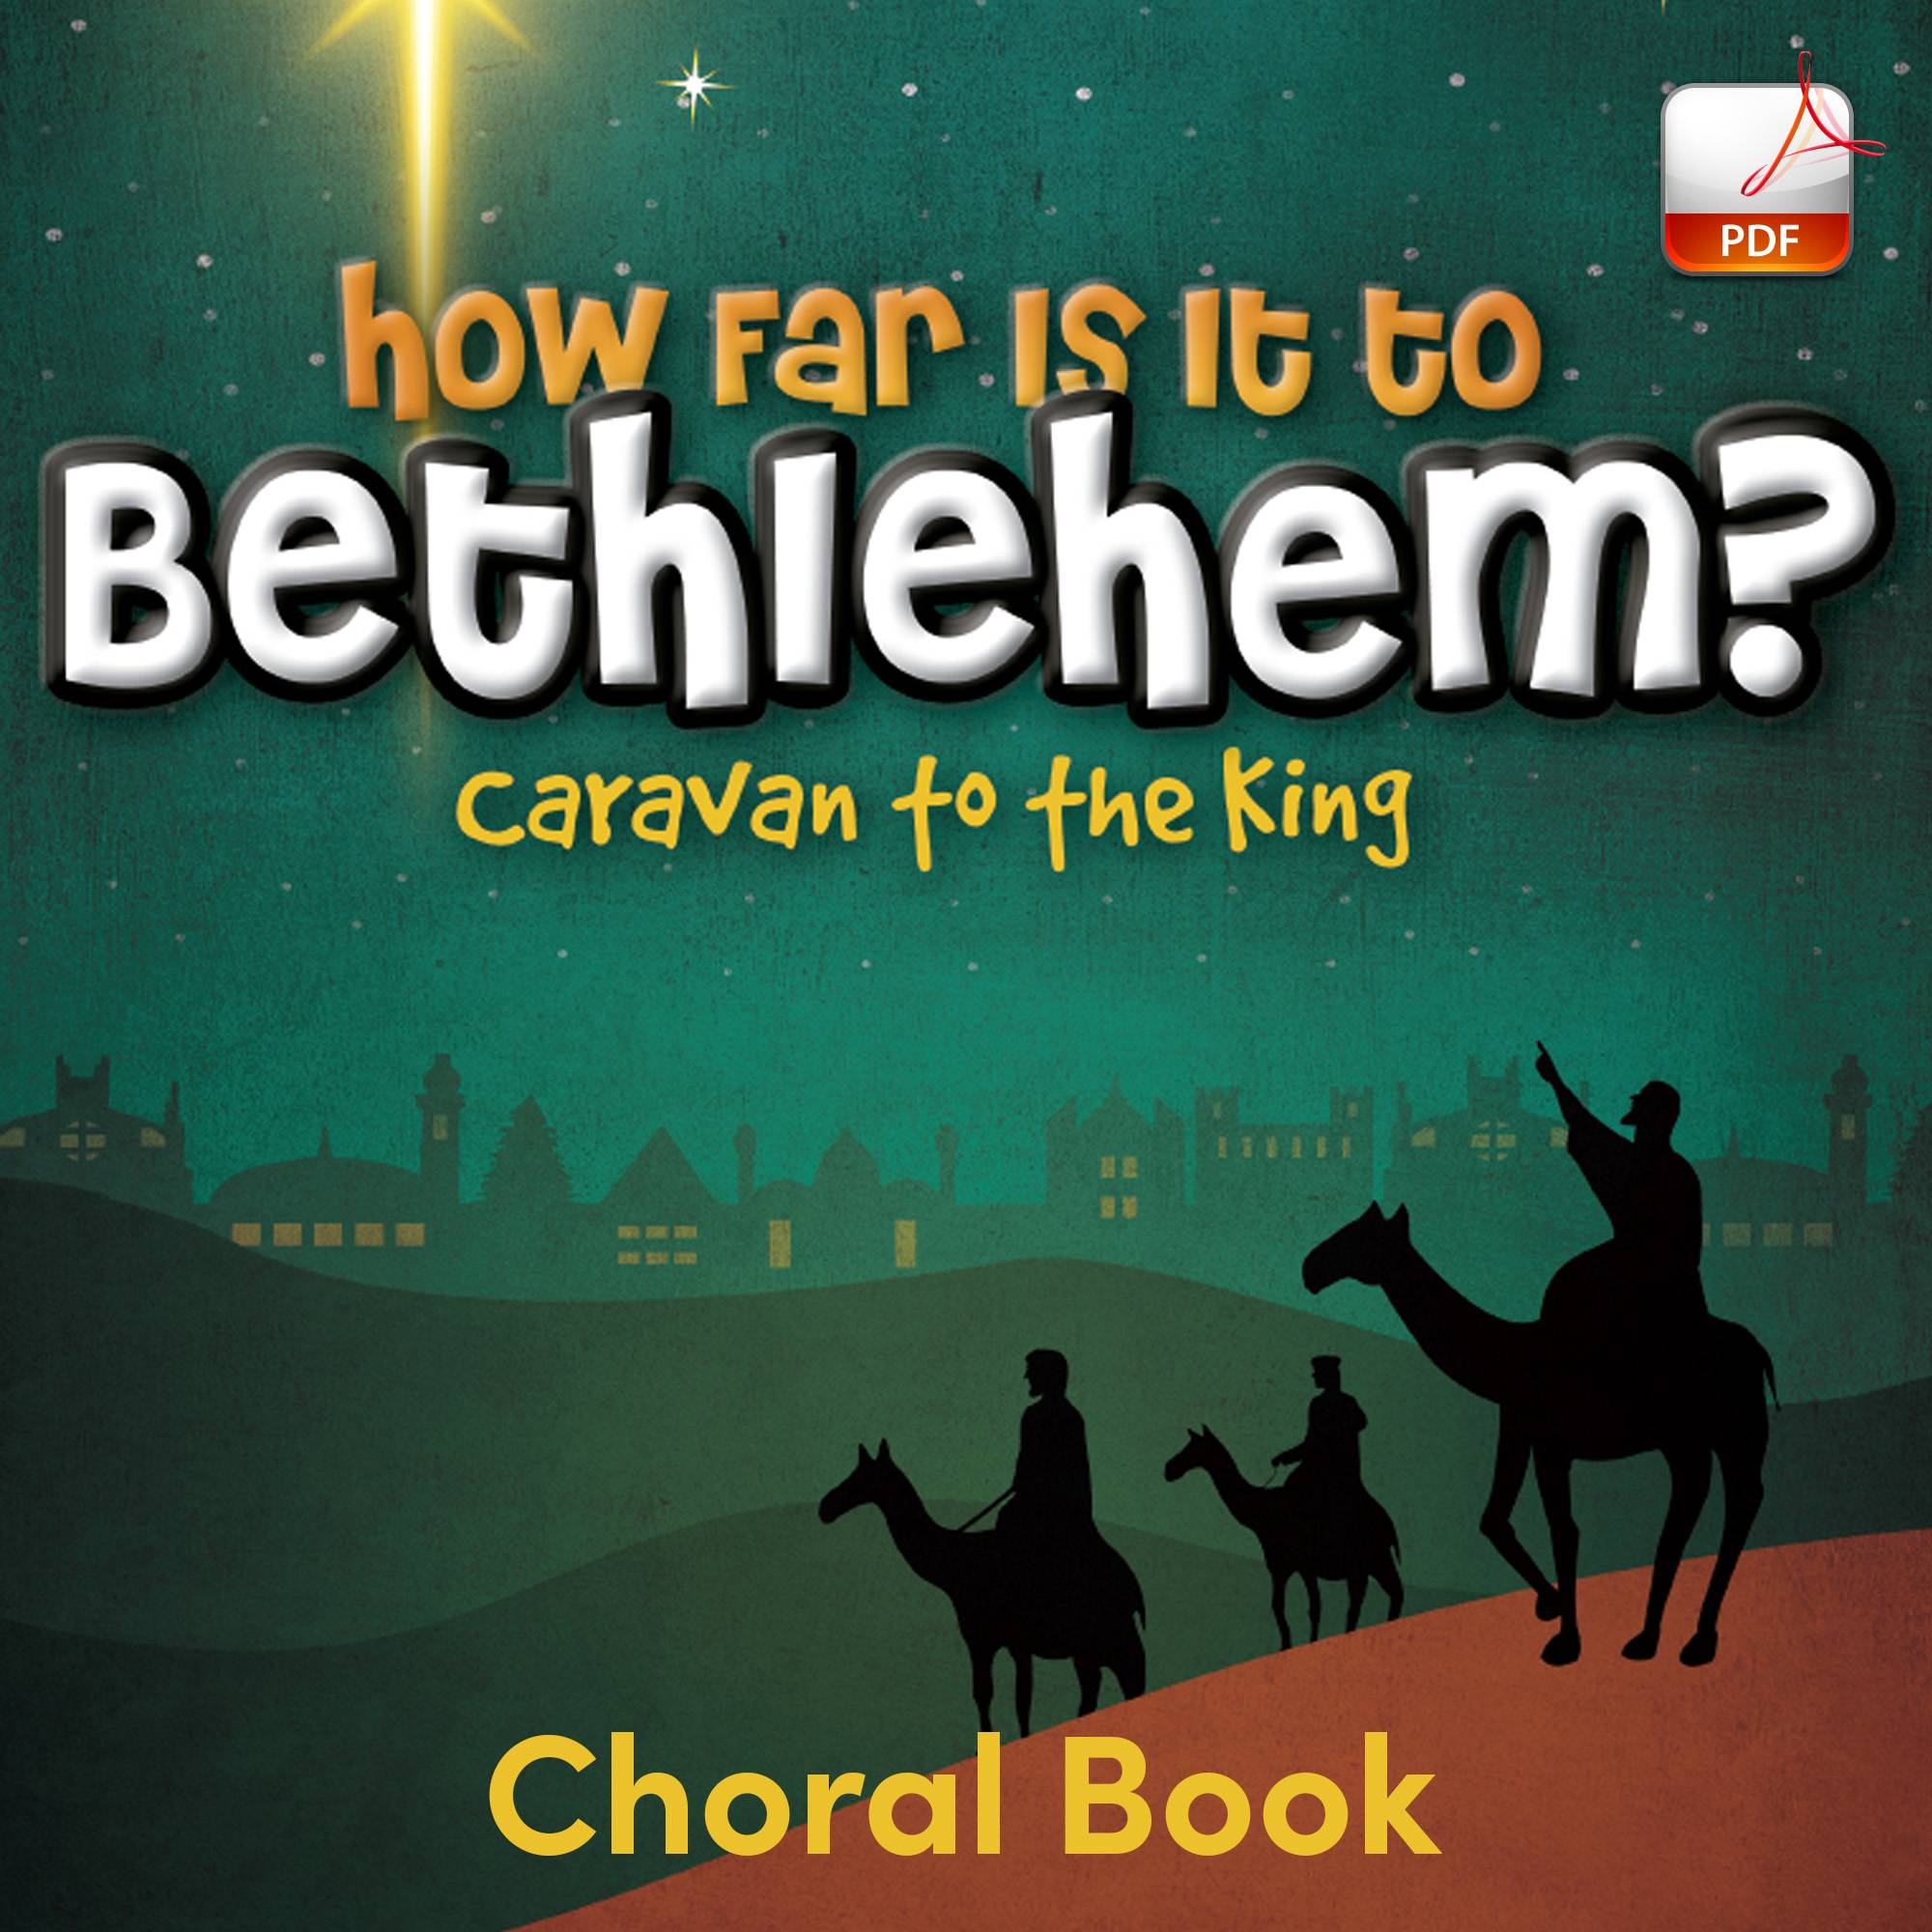 On the Way to Bethlehem (Pkg of 10 books) · Cokesbury Kids